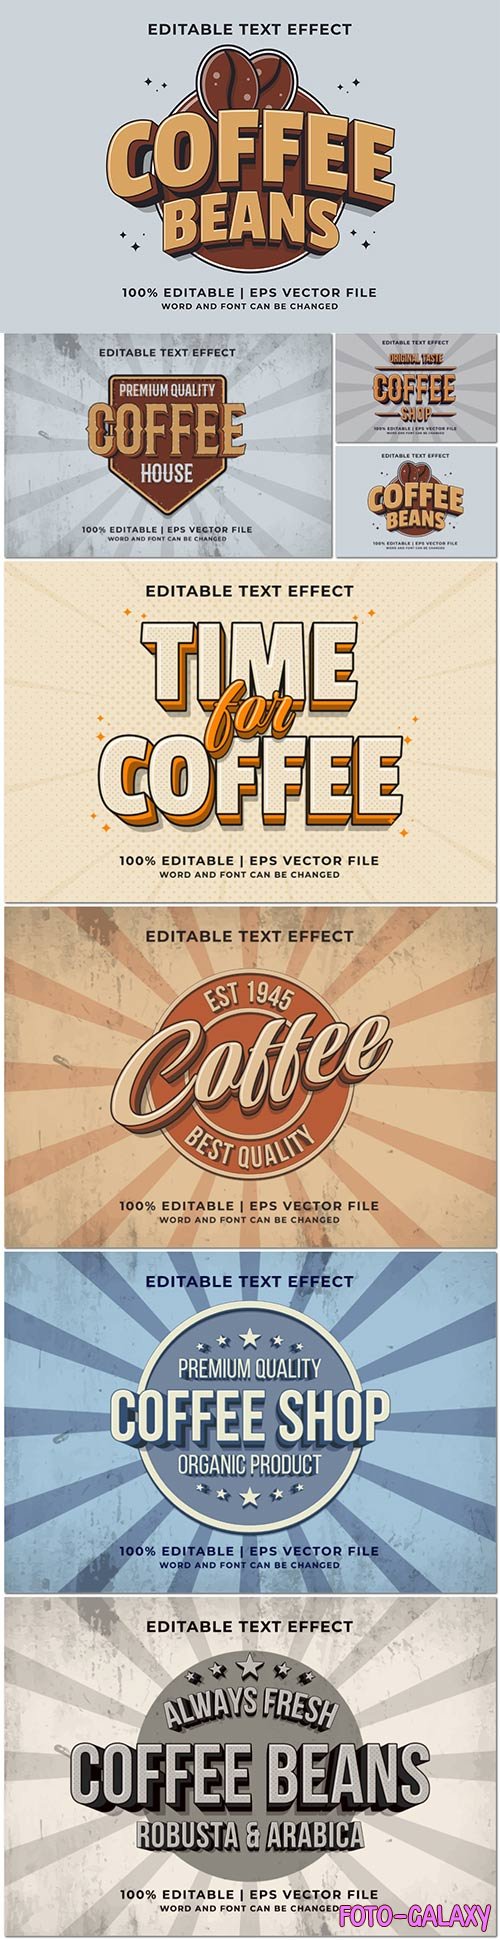 Editable text effect - coffee beans retro template style premium vector